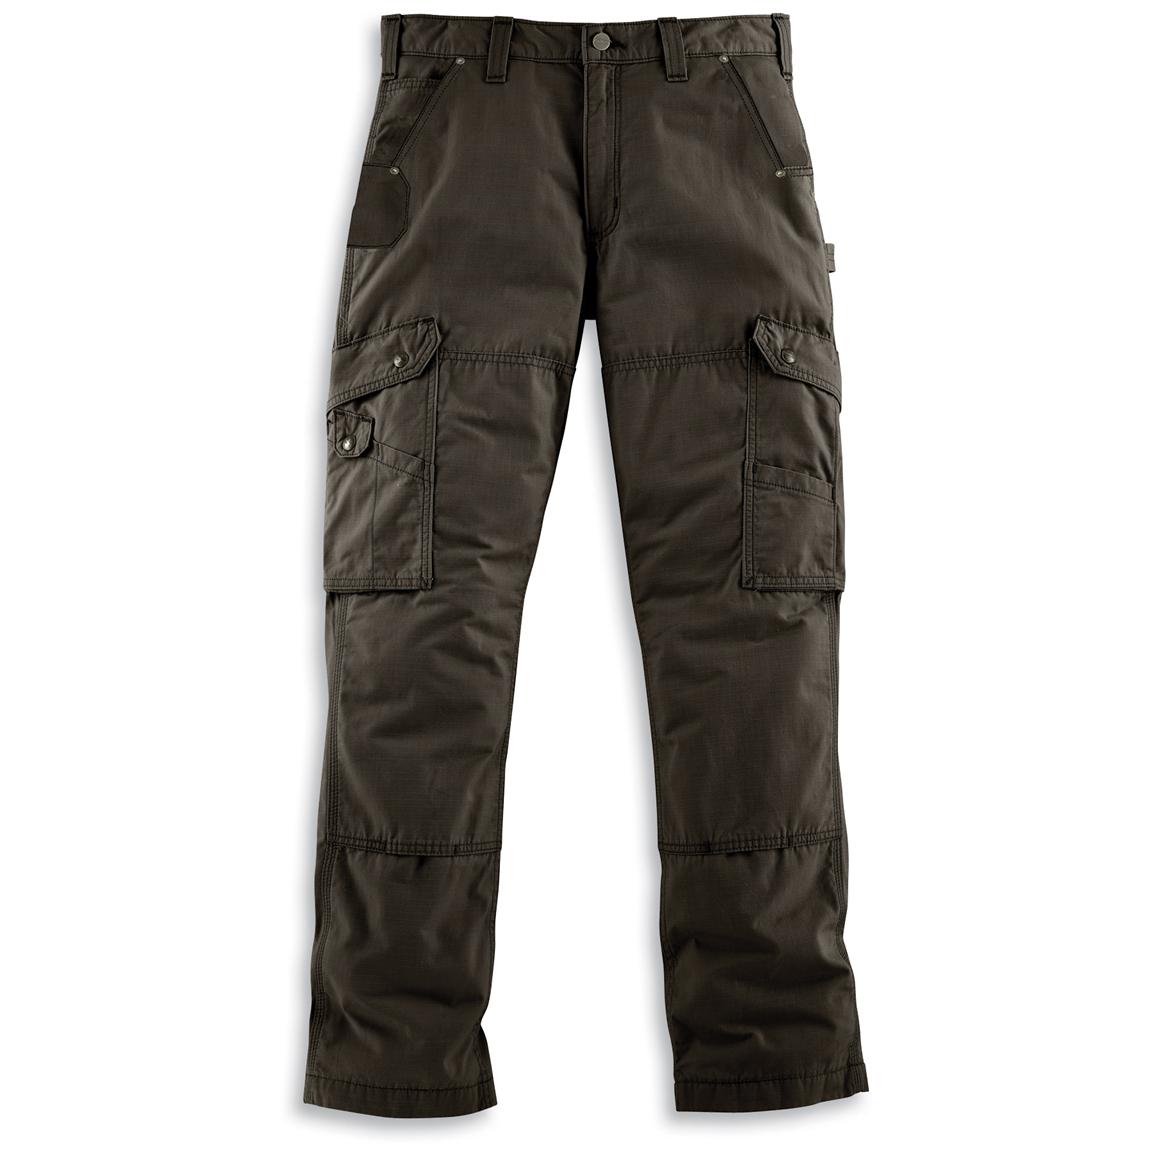 Carhartt Men's Ripstop Cargo Pants - 227211, Jeans & Pants at Sportsman ...